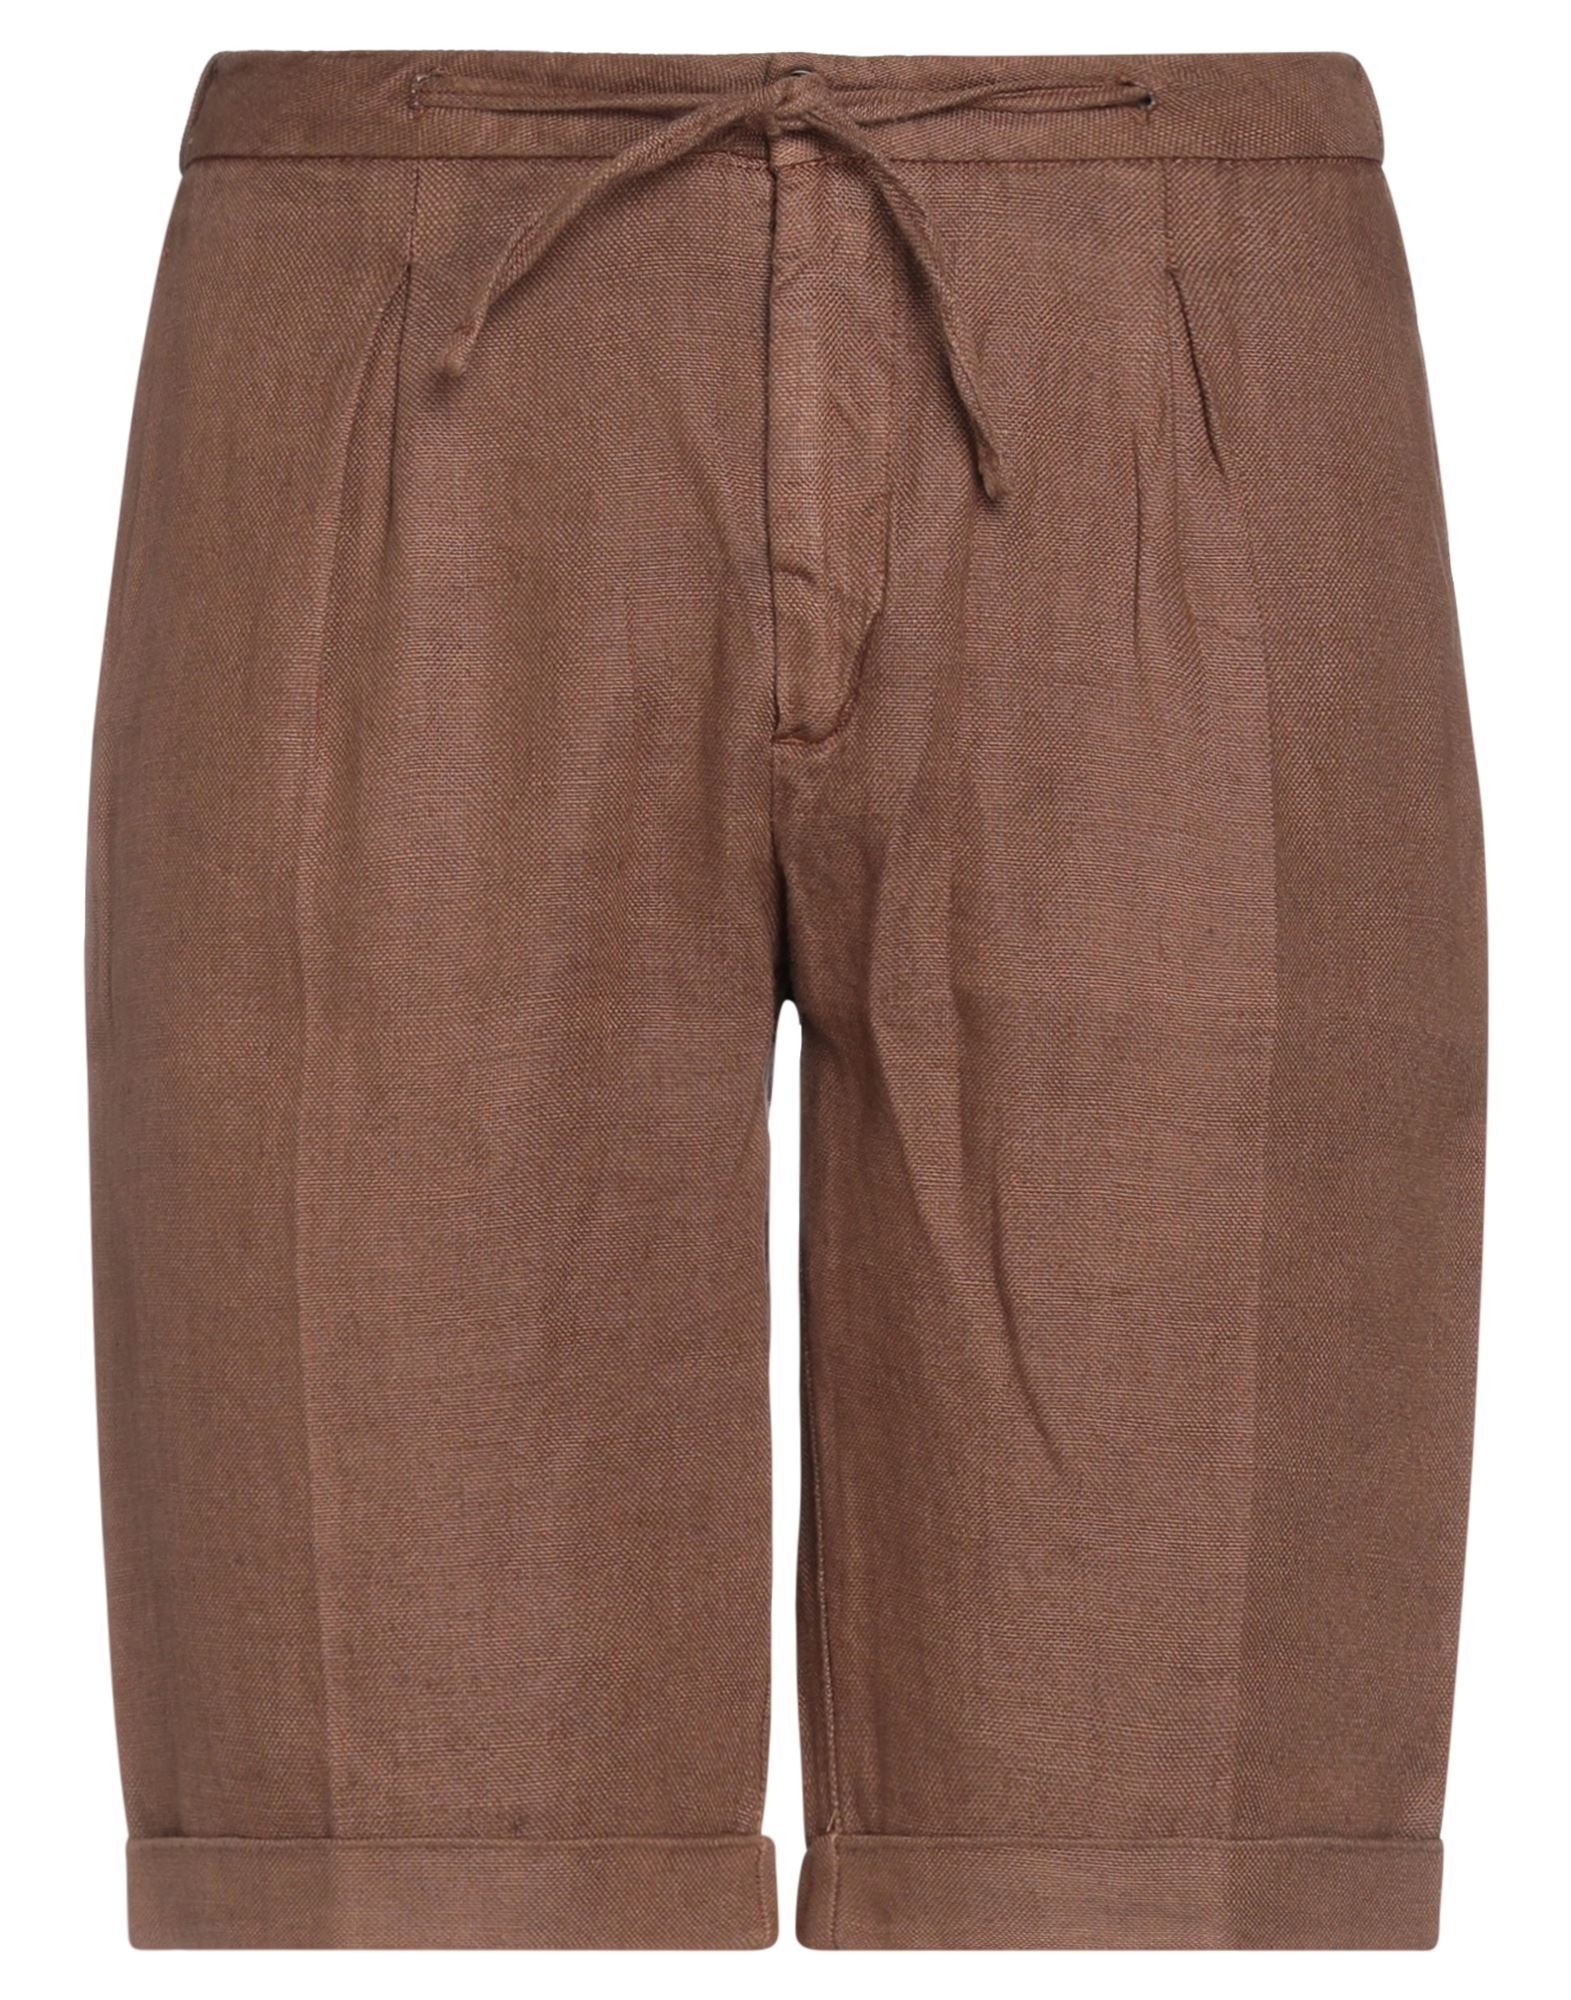 Bulgarini Man Shorts & Bermuda Shorts Brown Size 38 Linen